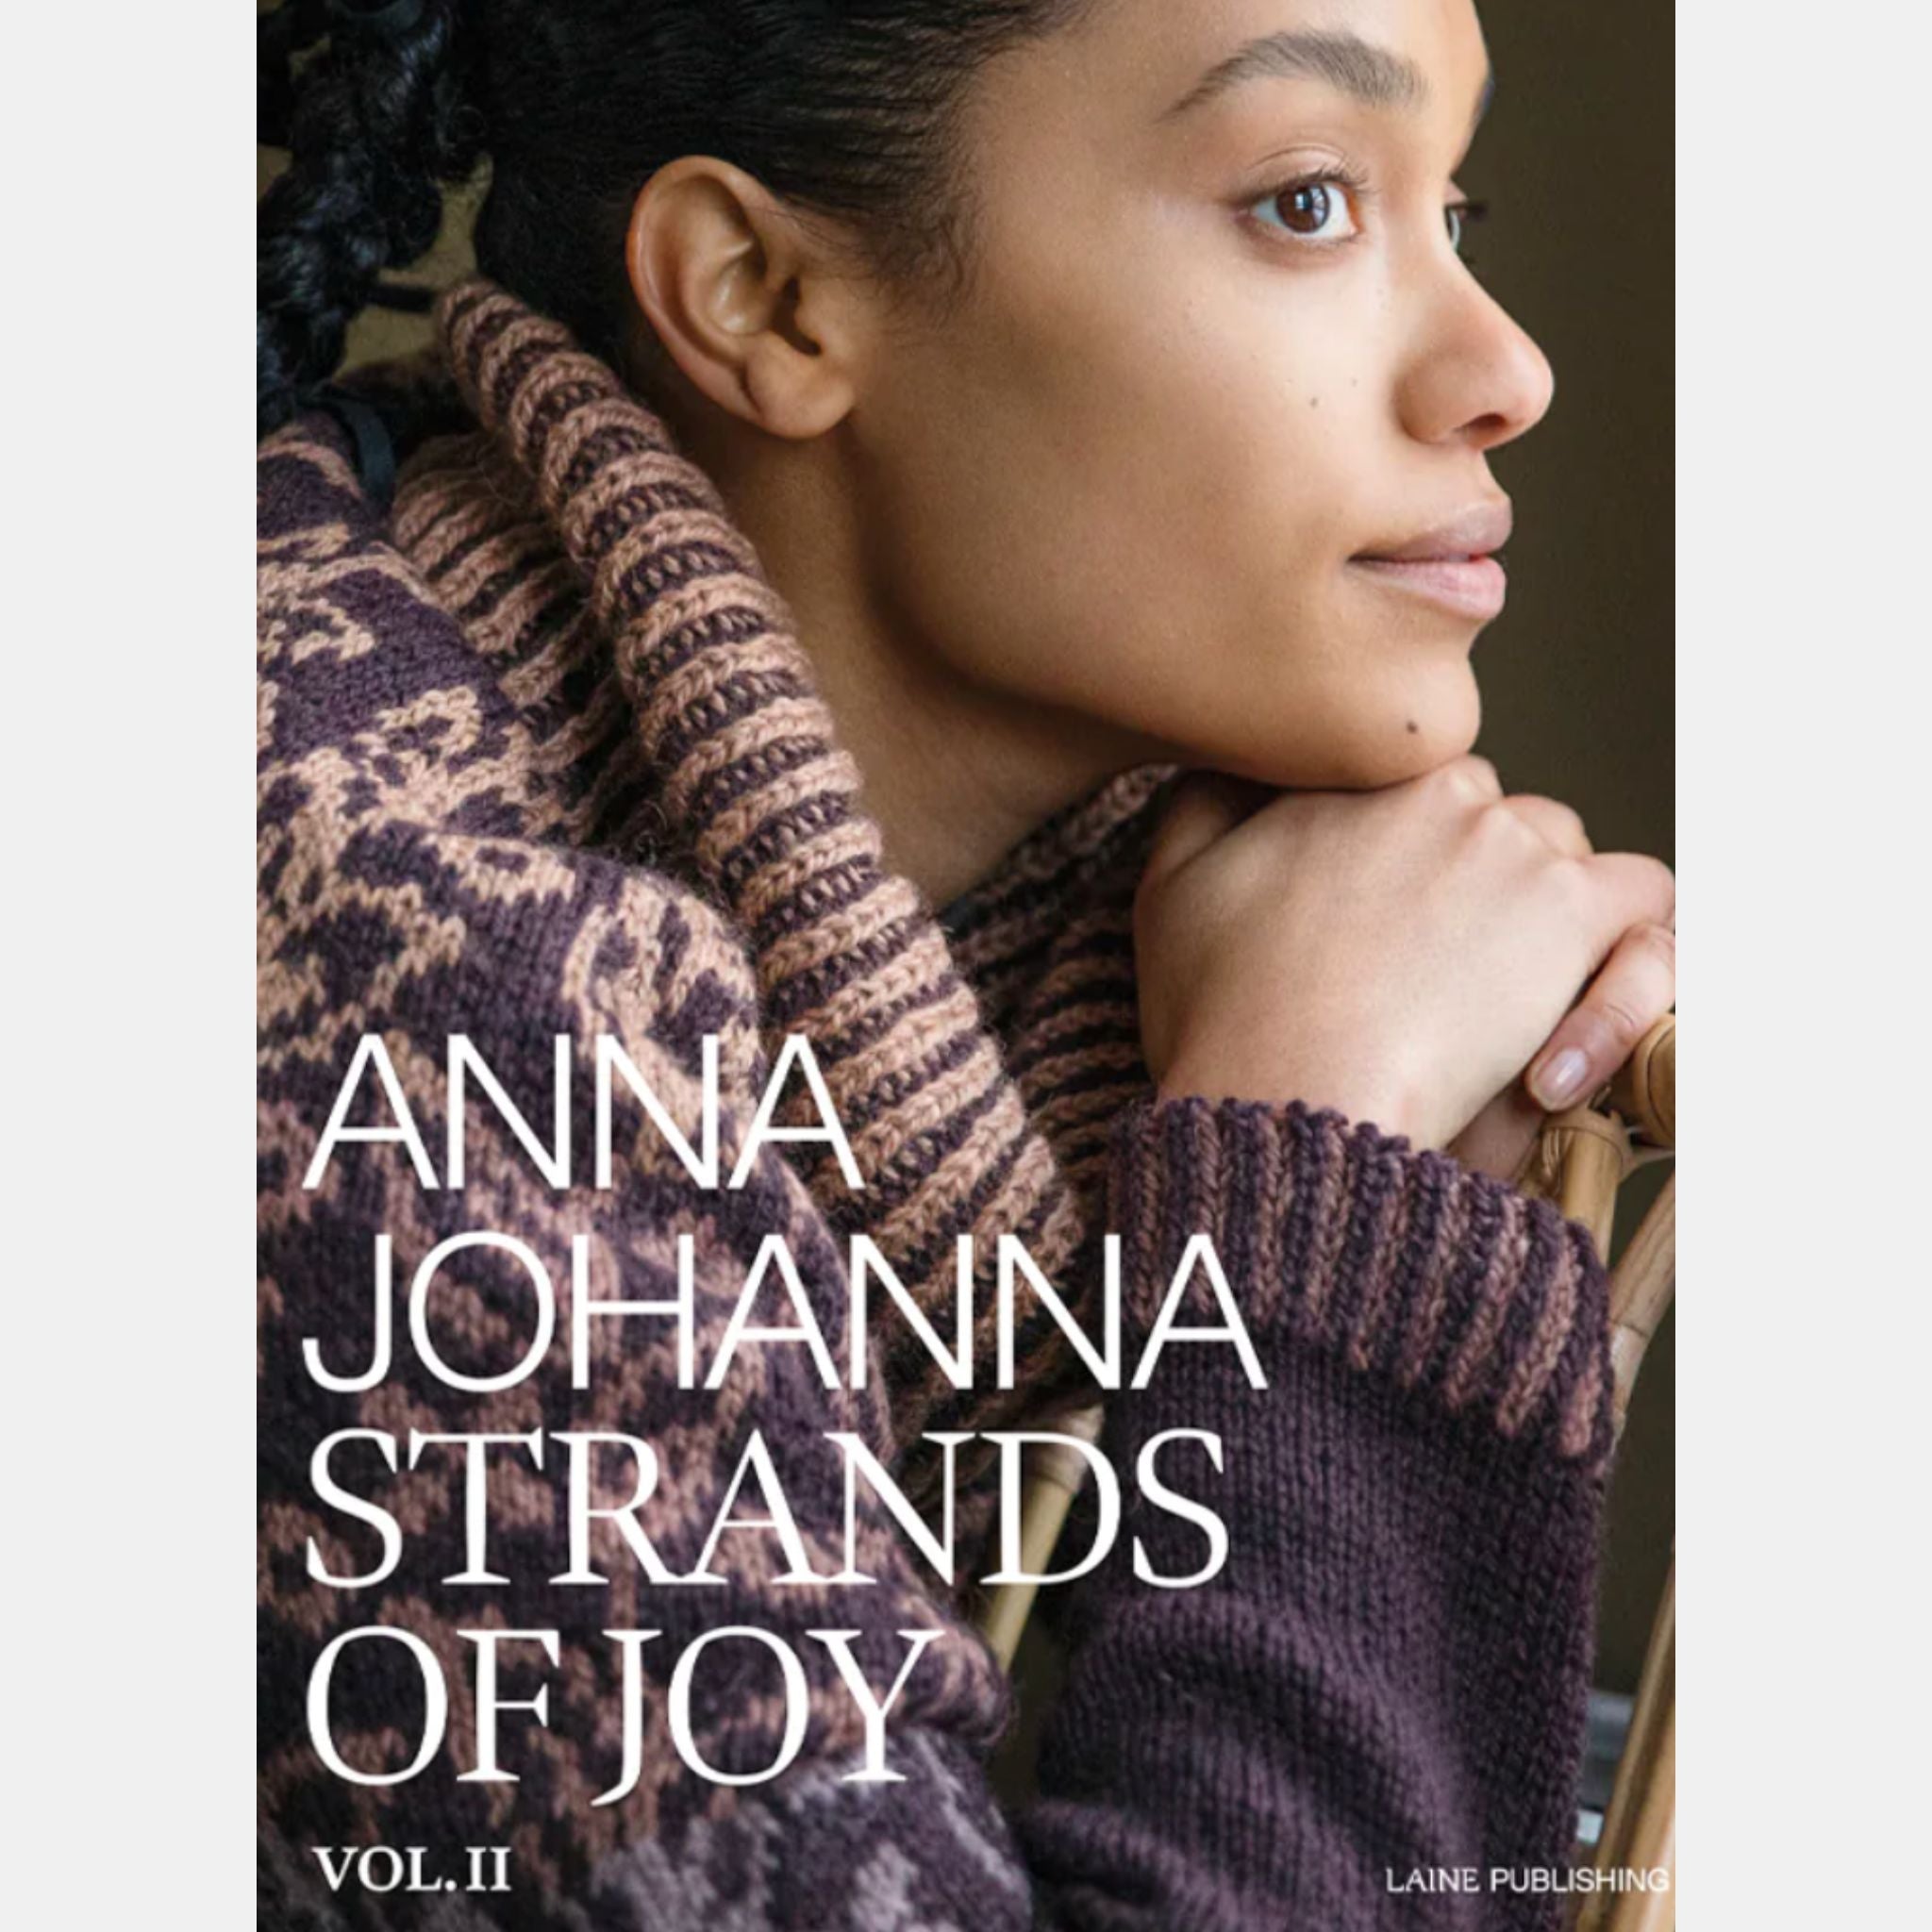 Strands of Joy Vol. II by Anna Johanna